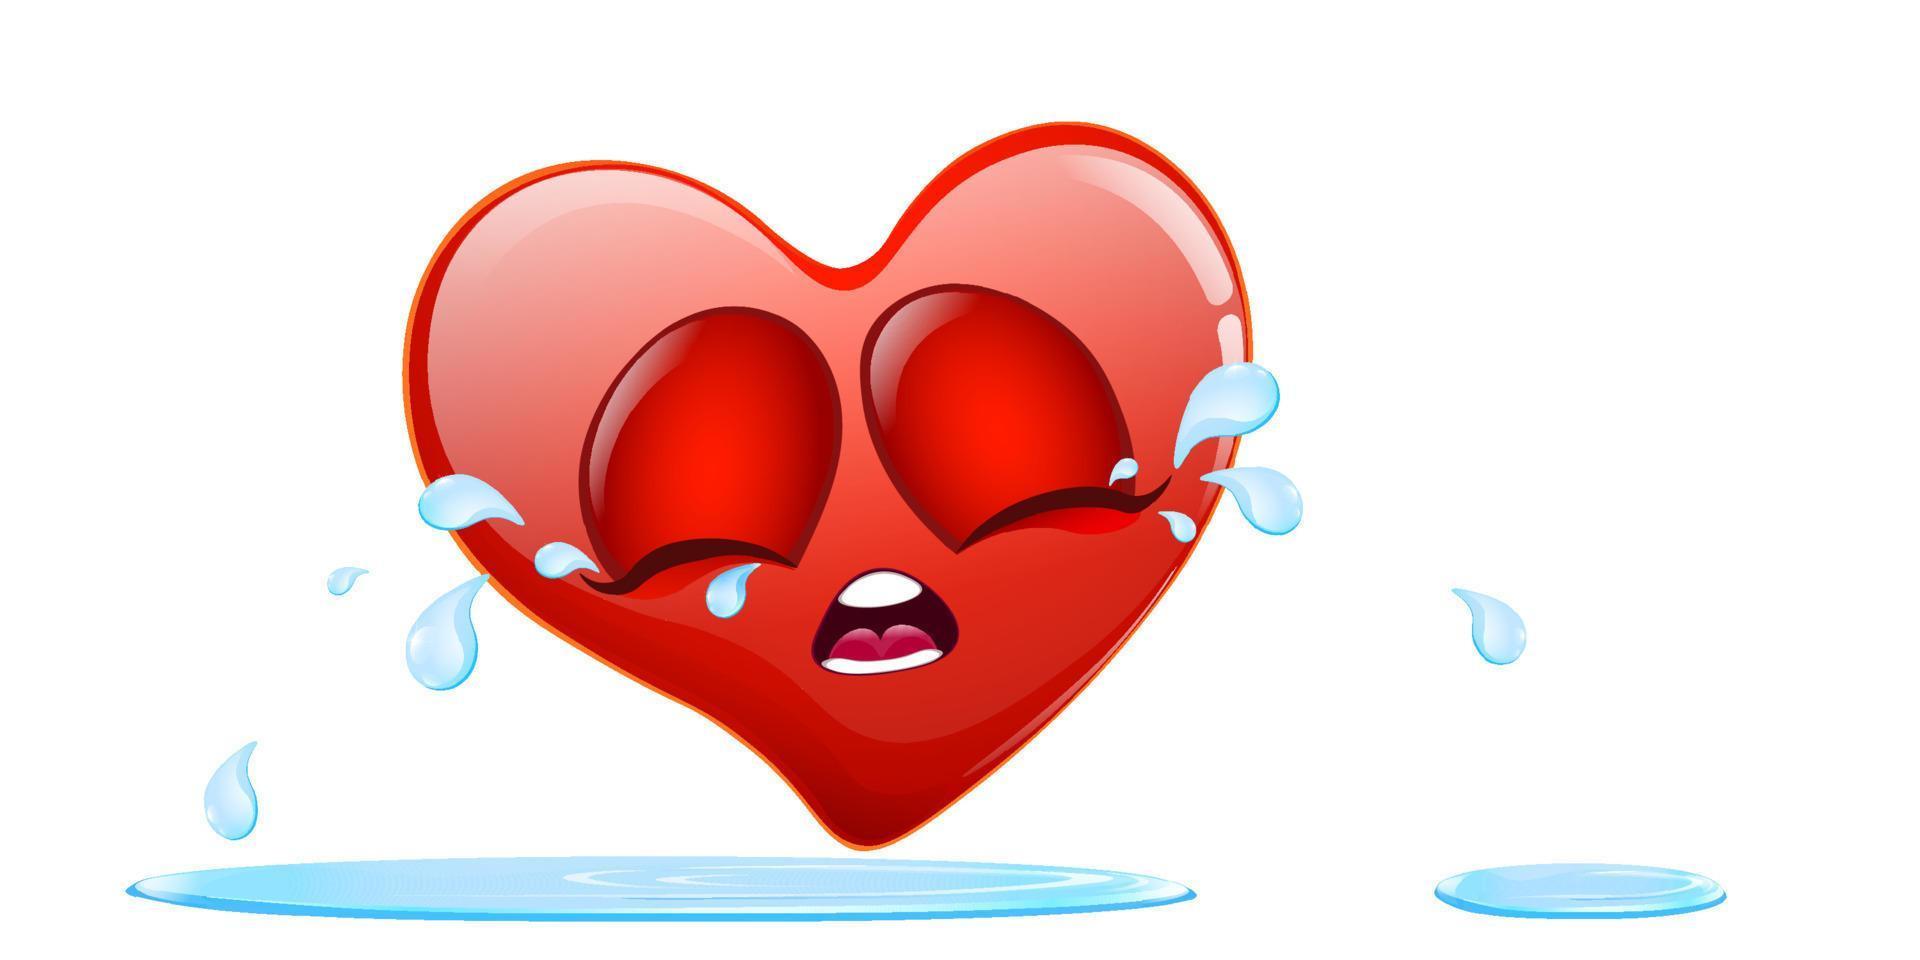 Upset cartoon red heart crying vector